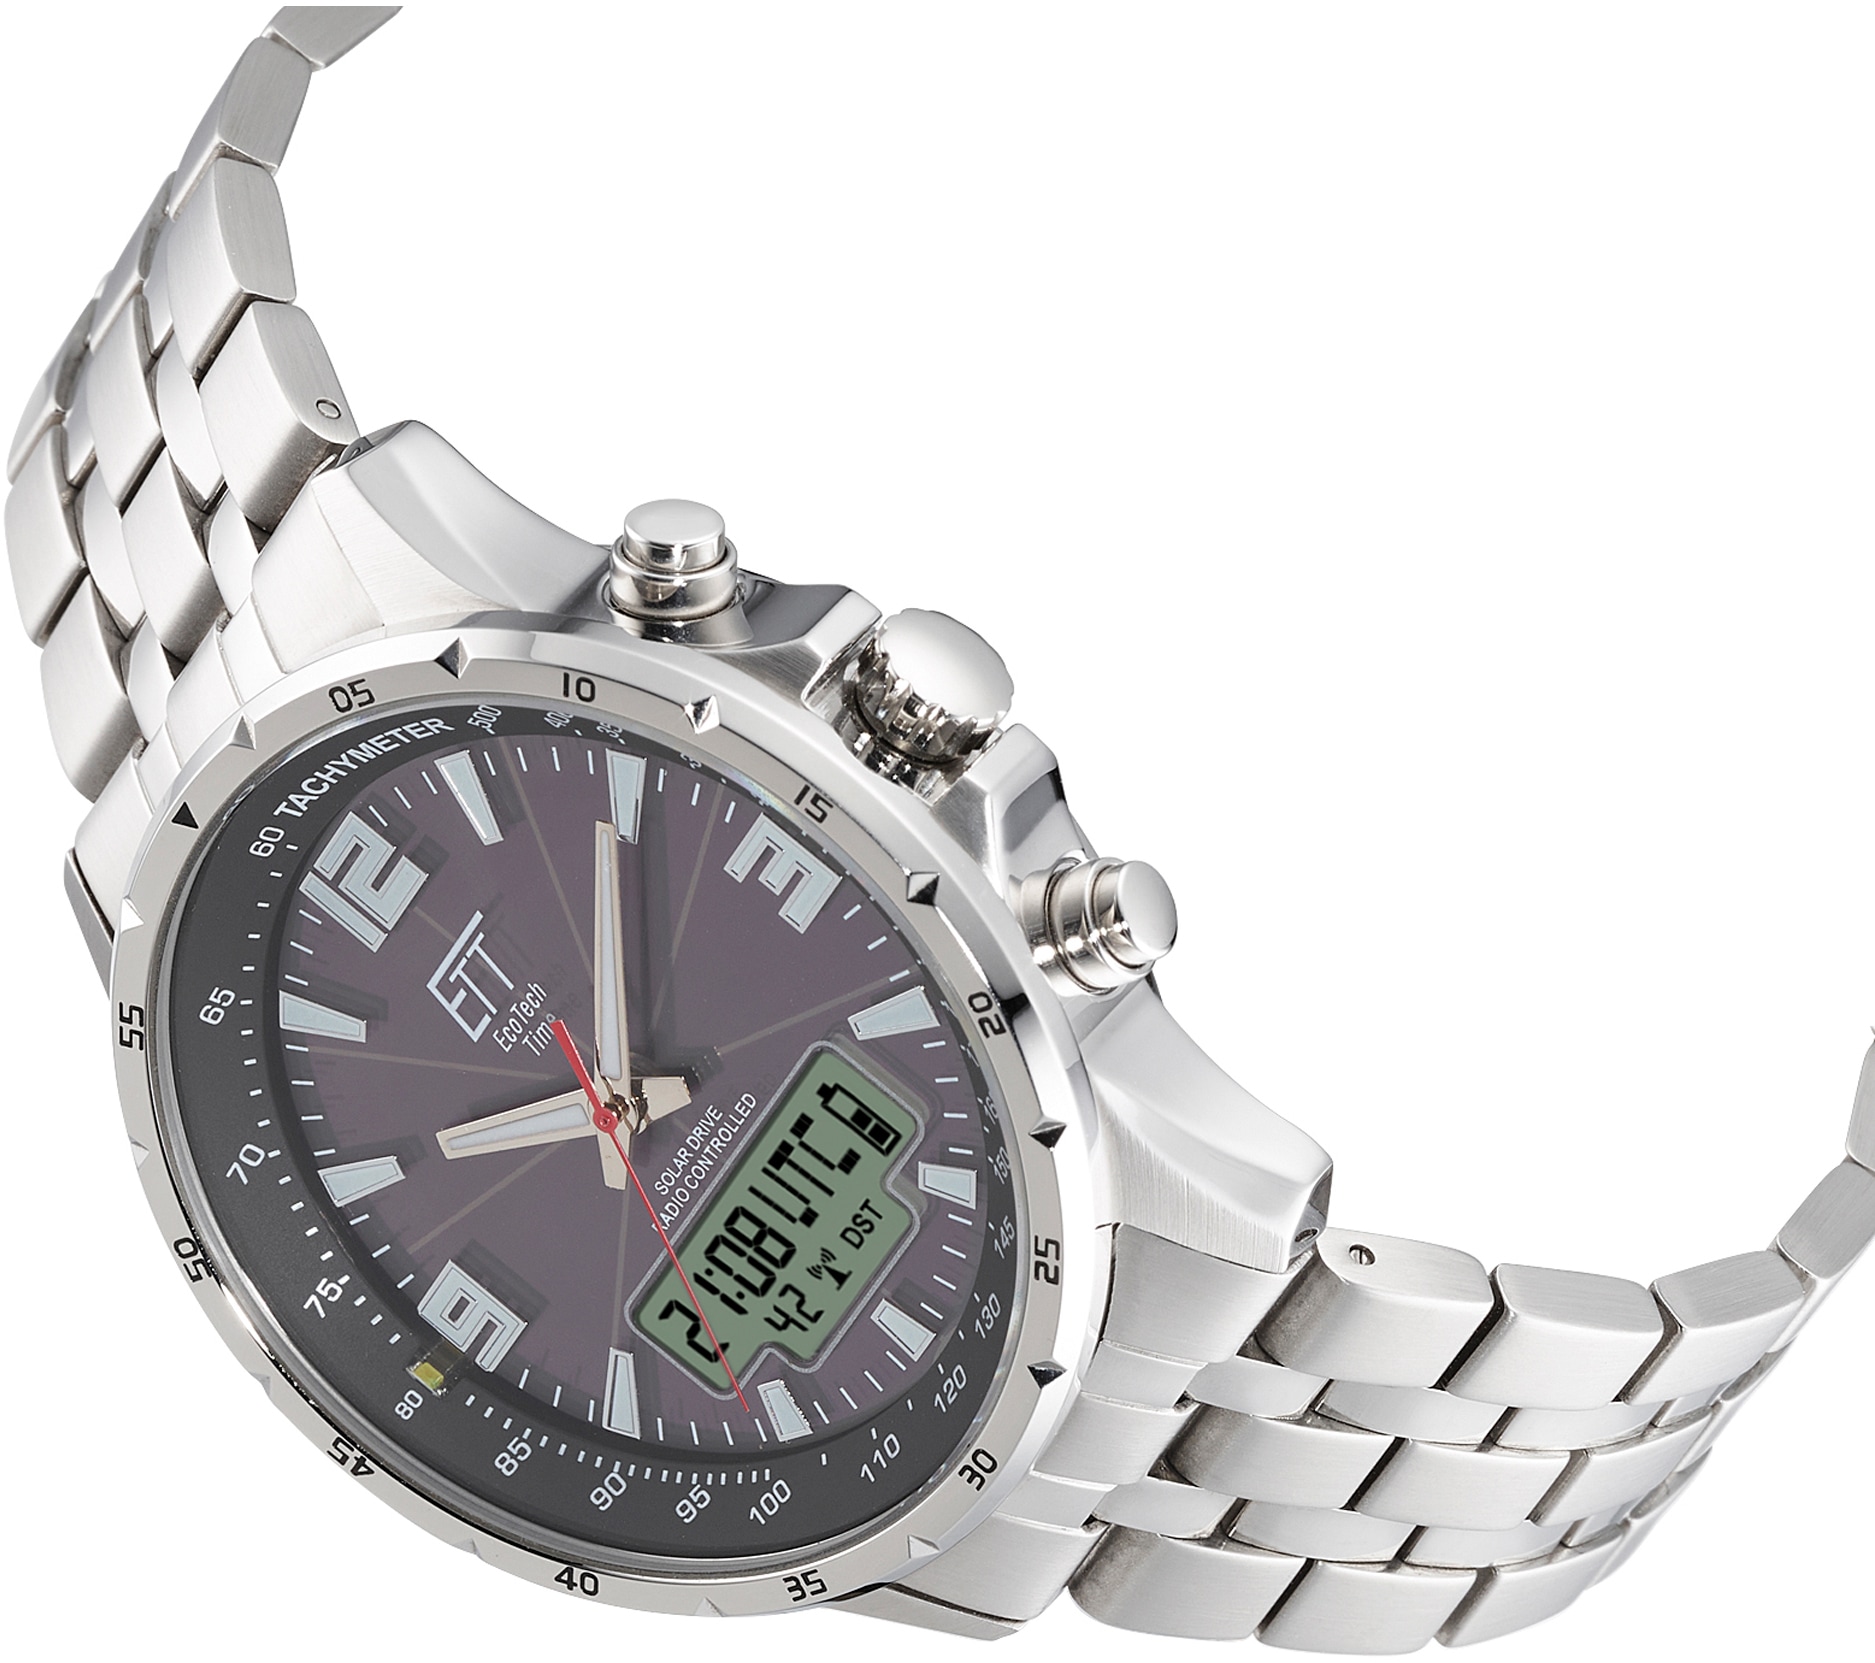 ETT Funkchronograph »Professional, EGS-11551-21M«, Armbanduhr, Herrenuhr, Stoppfunktion, Datum, Solar